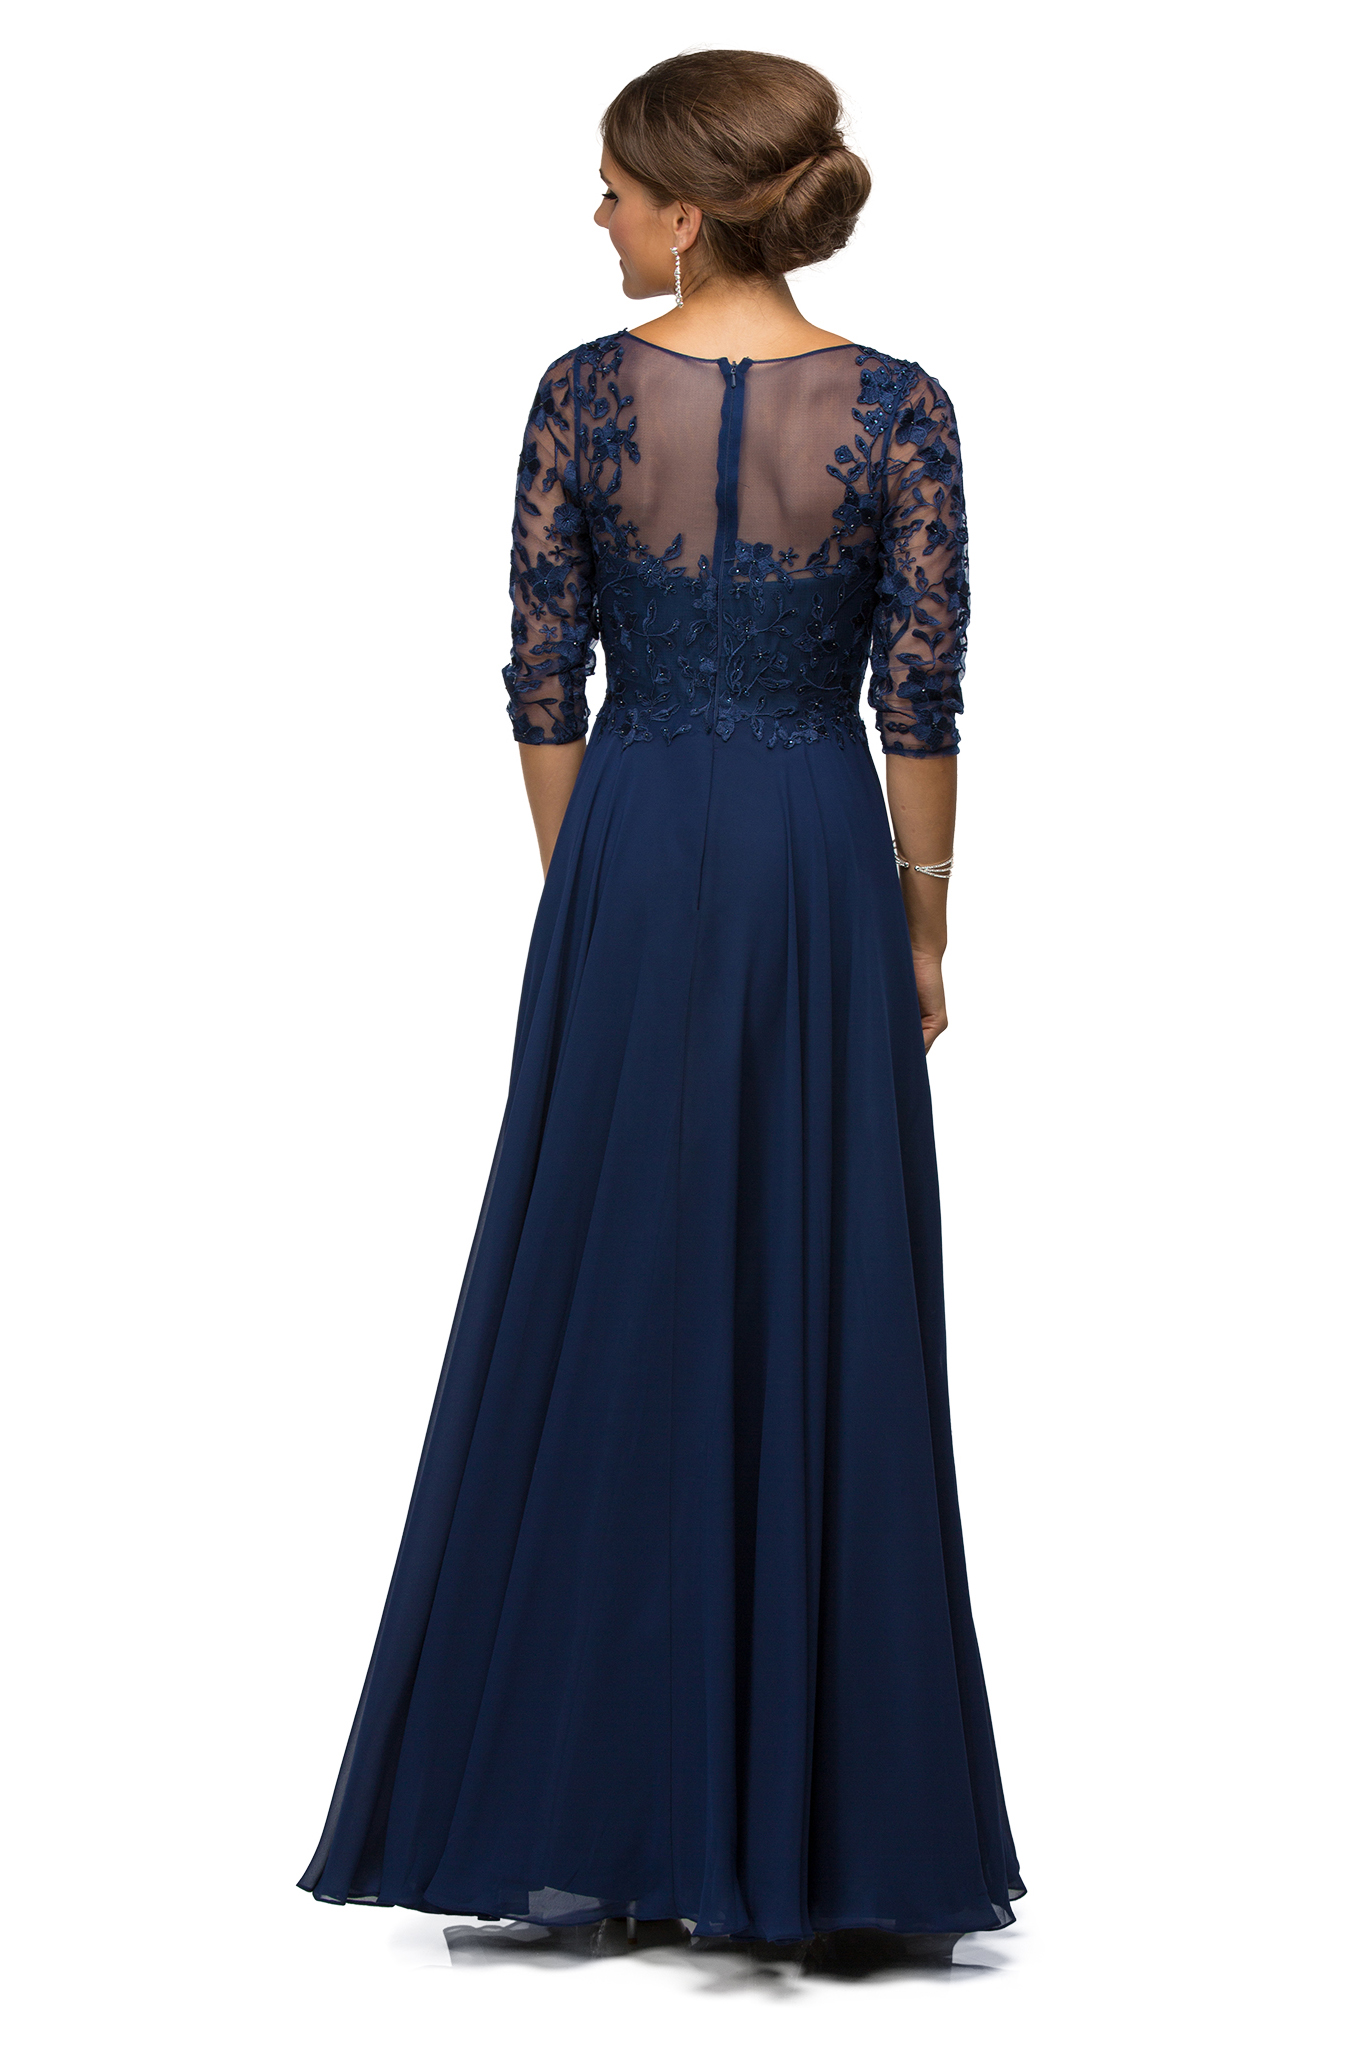 Simply Elegant Long Modest Mother of the Bride Dress Formal | eBay